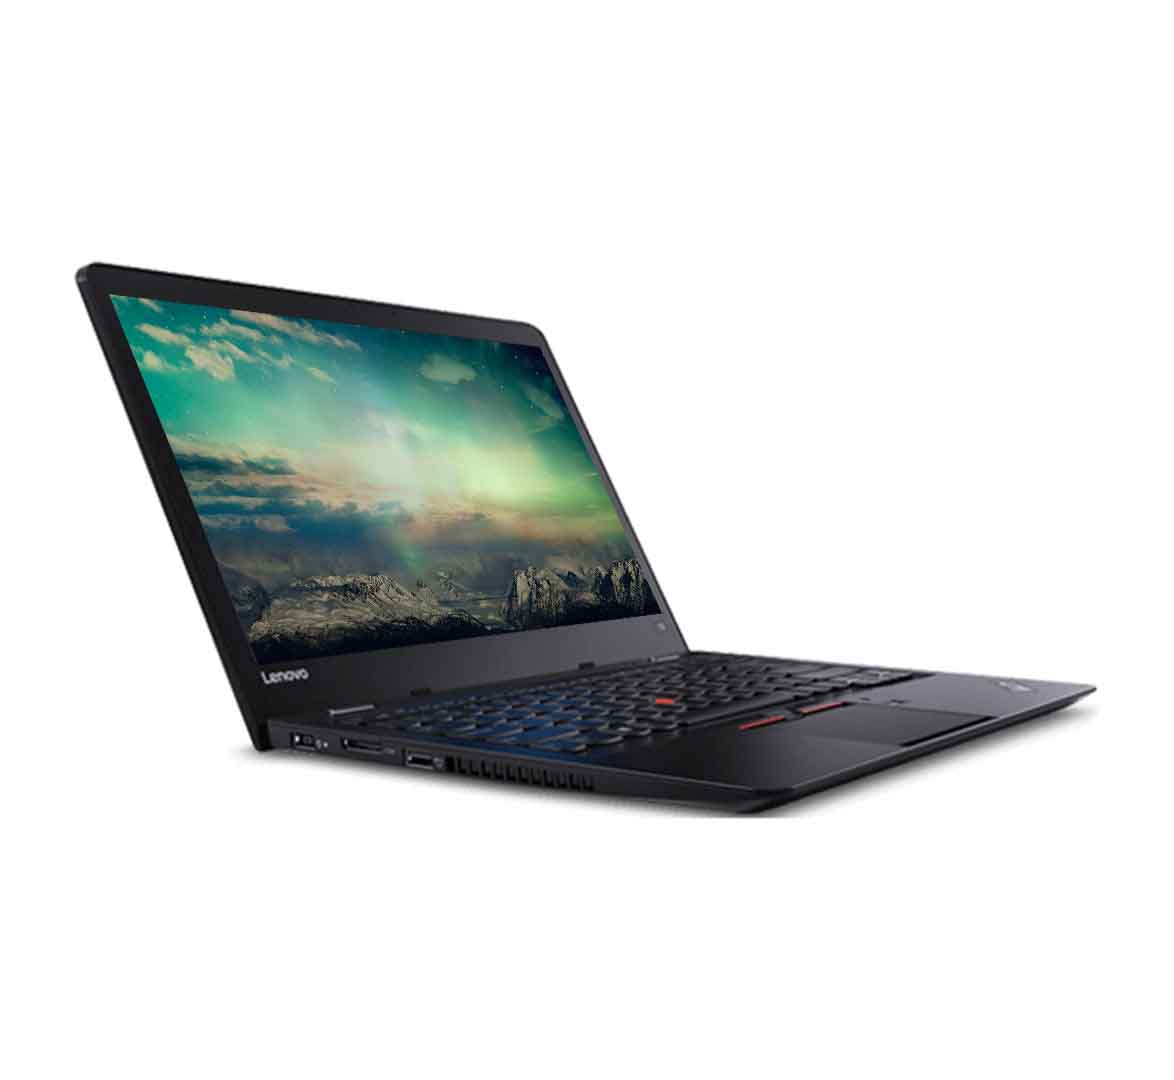 Lenovo ThinkPad 13 Business Laptop, Intel Core i3-7th Generation CPU, 8GB RAM, 128GB SSD, 13.3 inch, Windows 10 Pro, Refurbished Laptop